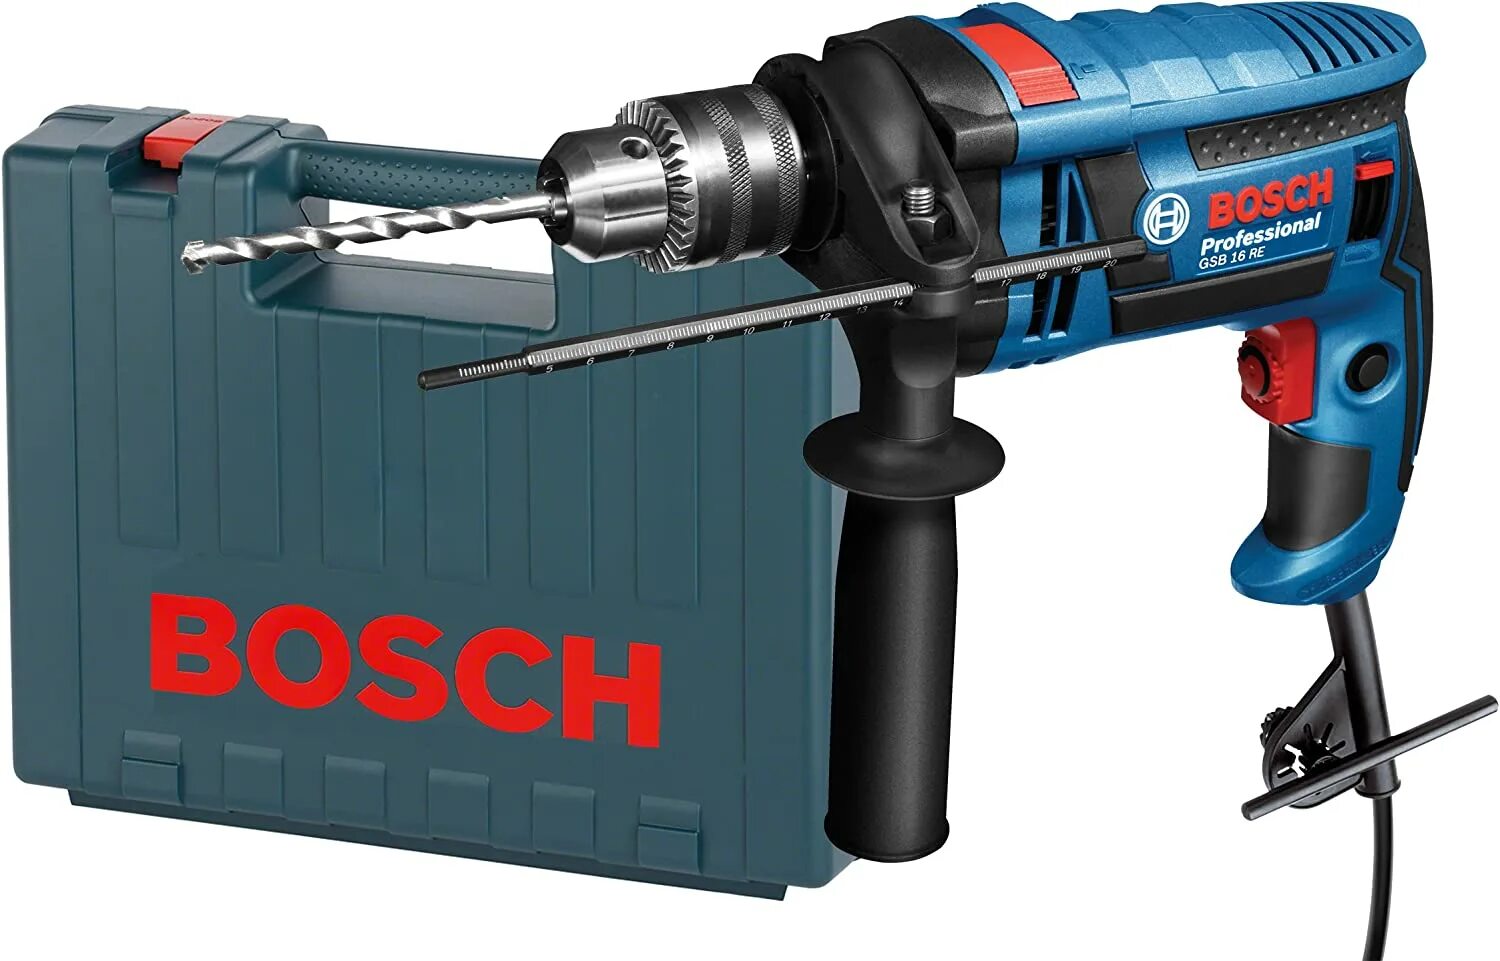 Bosch gsb купить. Bosch GSB 16 re. Дрель бош GSB 16. Bosch GSB 16 re professional. Дрель ударная Bosch GSB 16 re professional.